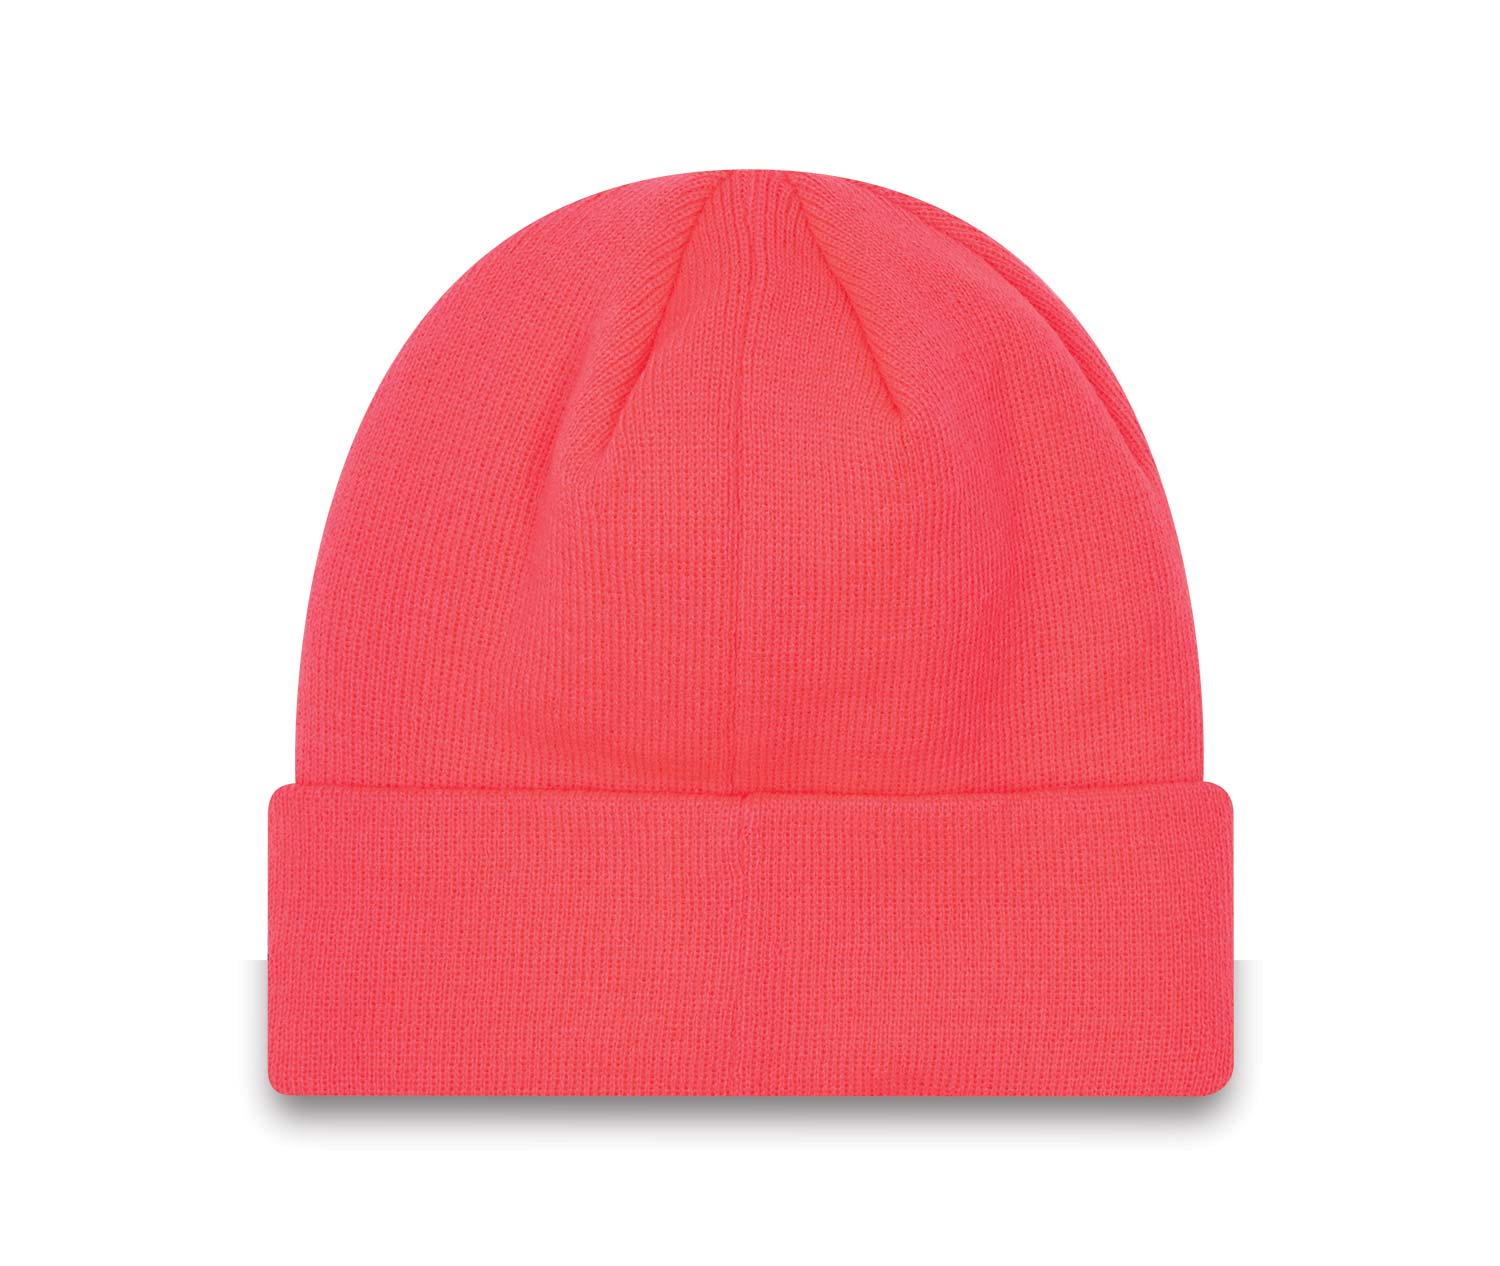 New York Yankees Neon Bright Pink Beanie Hat